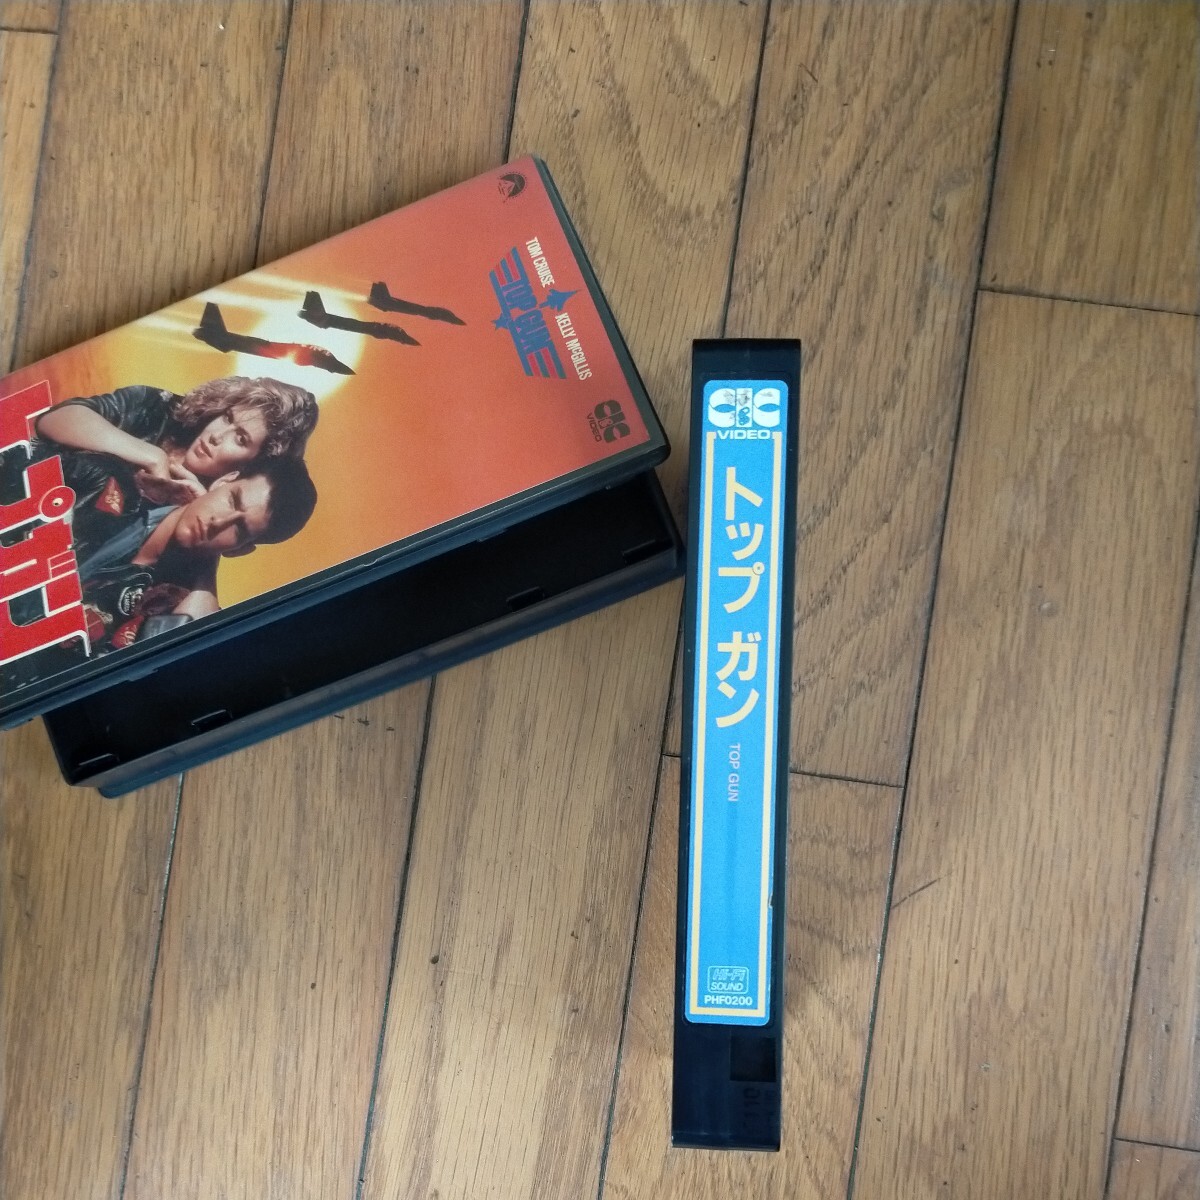  top gun /TOPGUN VHS videotape postage discount equipped 